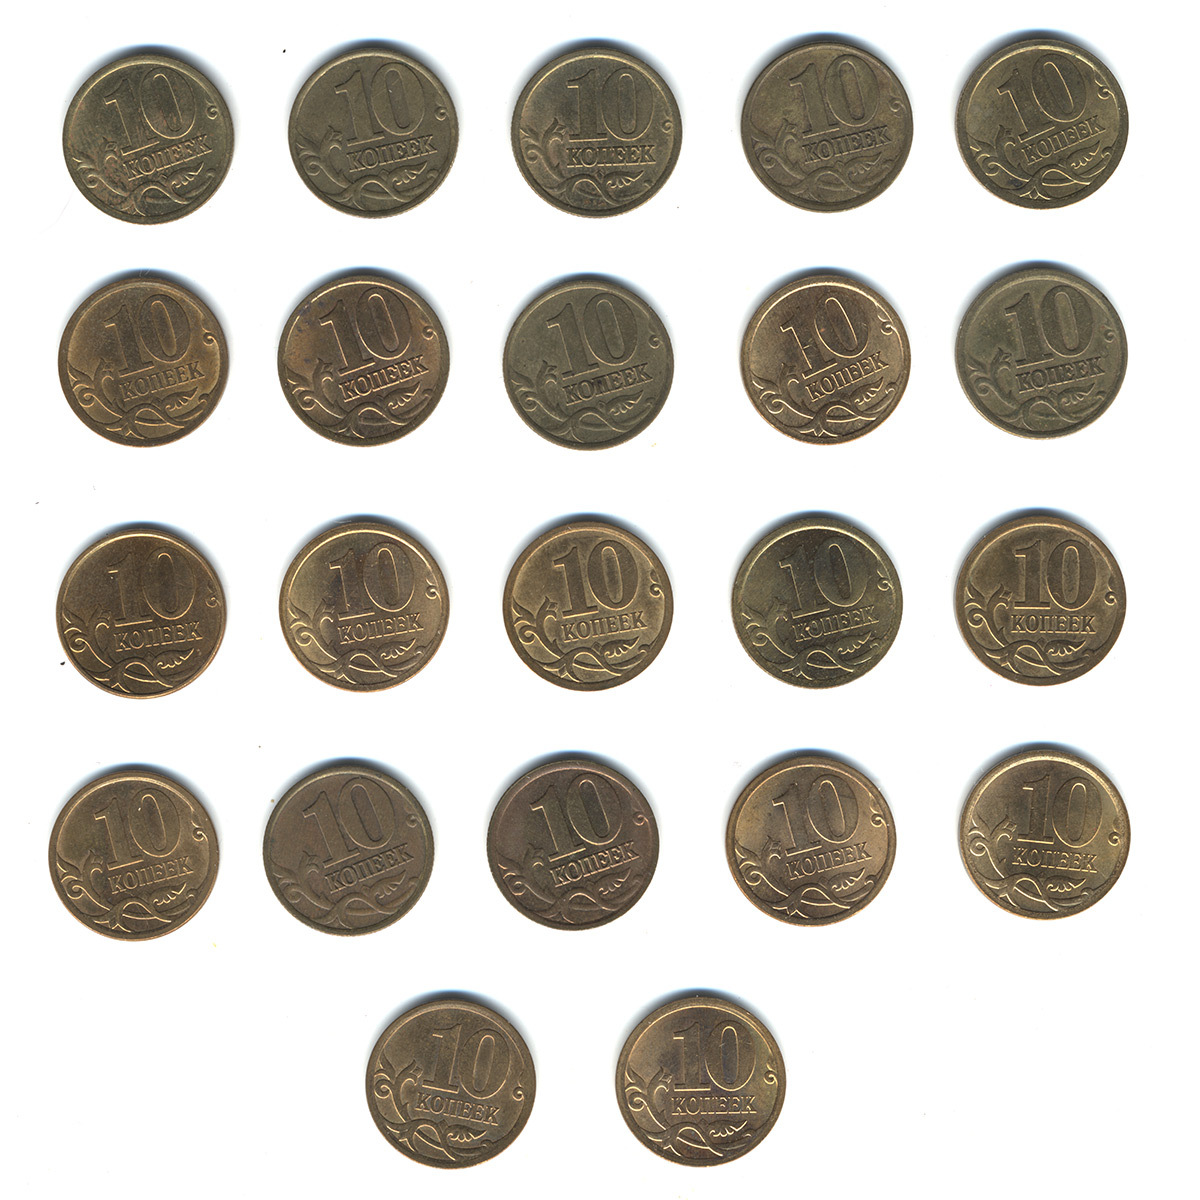 Монеты россии 1993 года. Набор монет 1997 года. Греция 2000 банковский набор монет. Великобритания годовой набор монет 2011. Годовой набор монет России 1993.